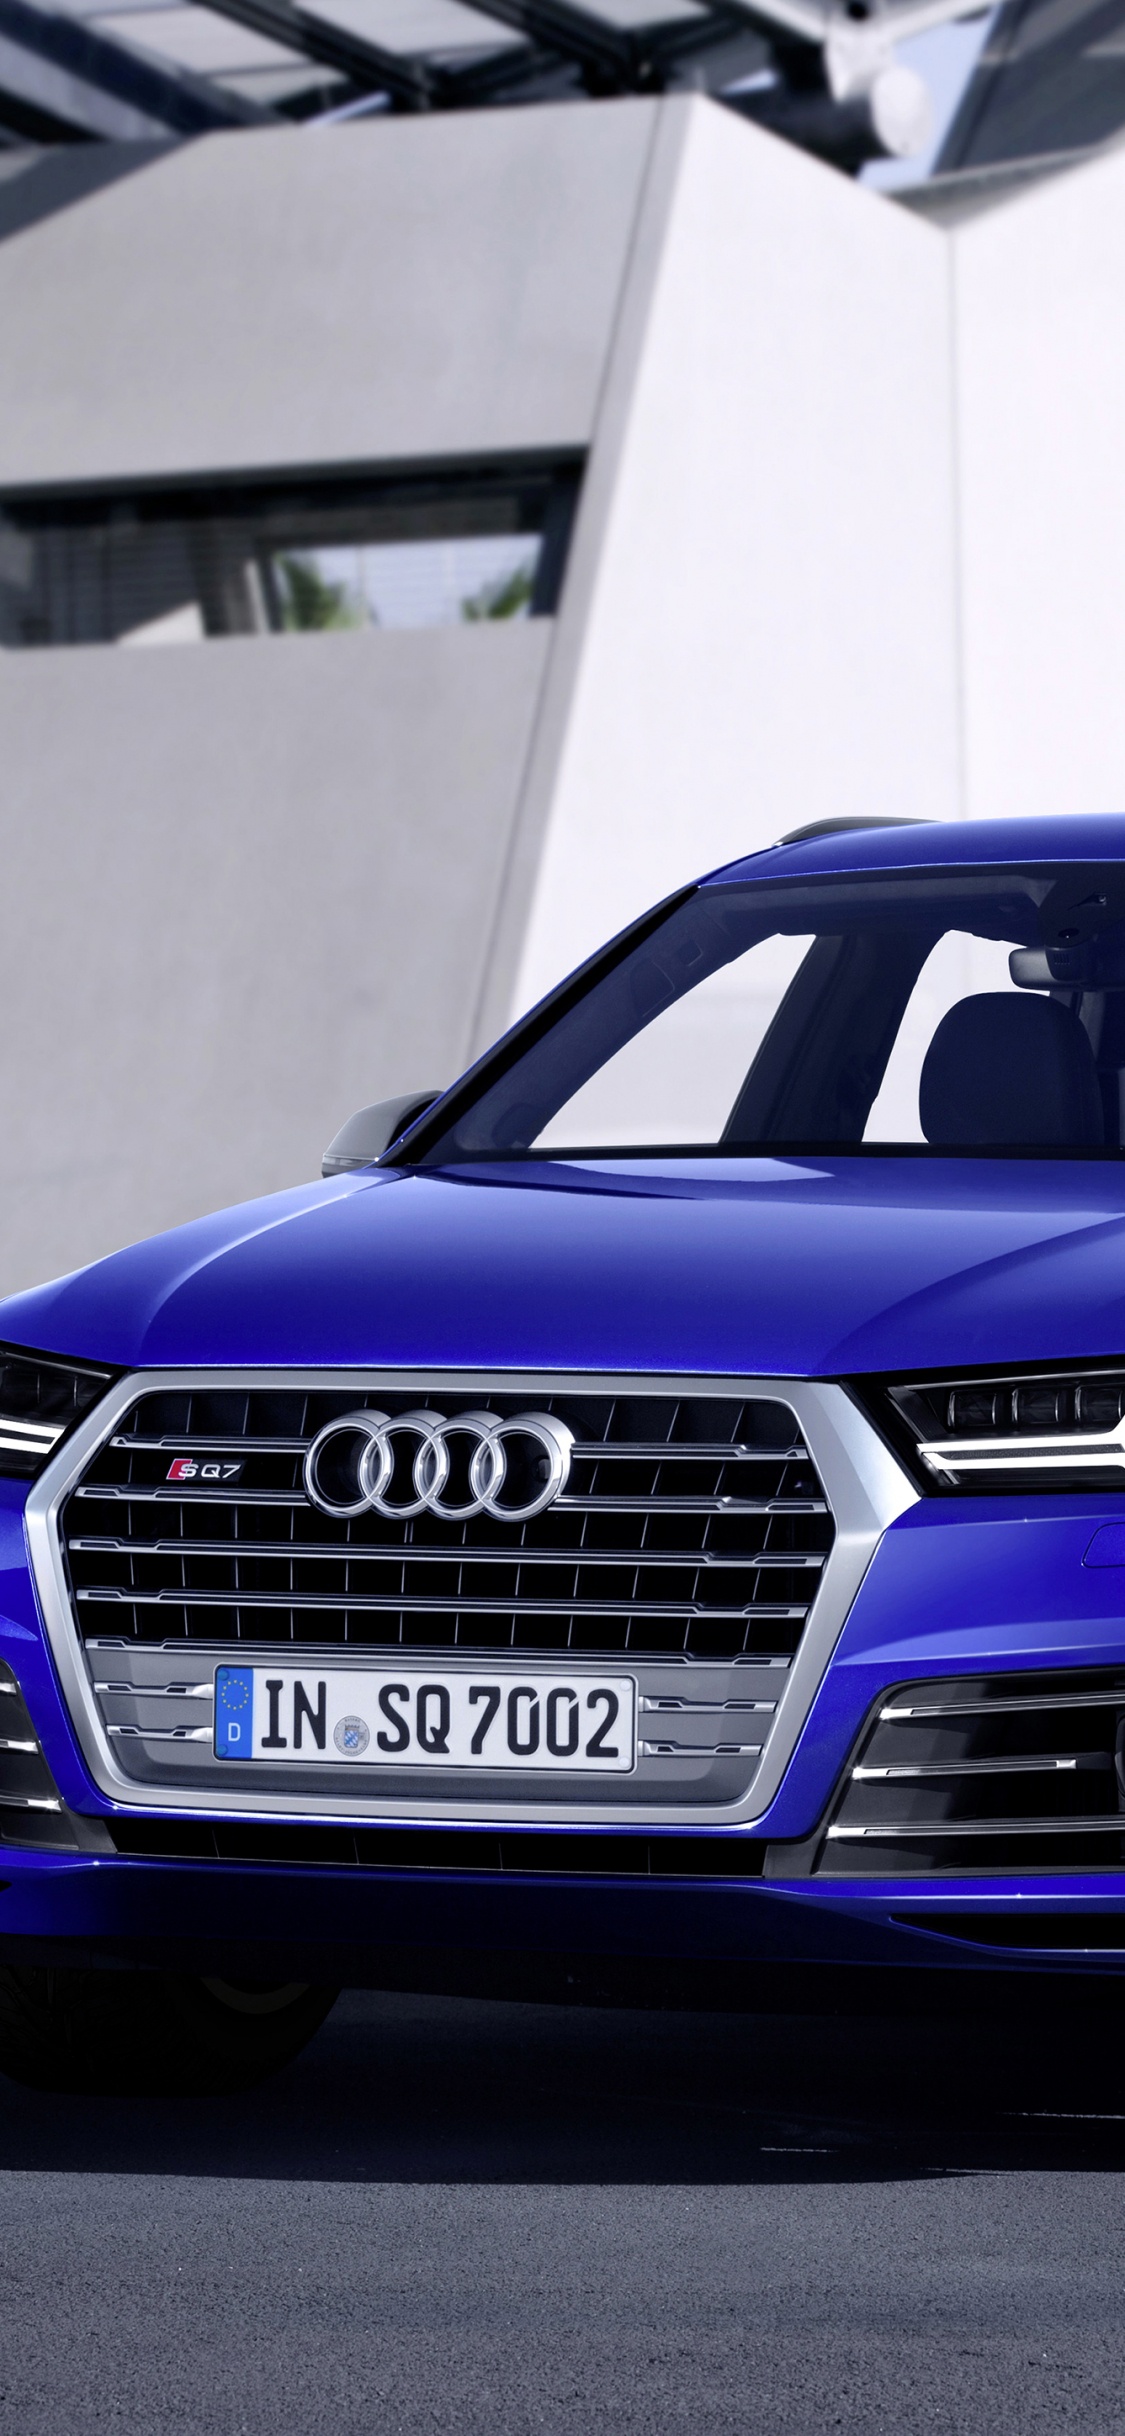 Grayscale Photo of Audi a 4 Sedan. Wallpaper in 1125x2436 Resolution